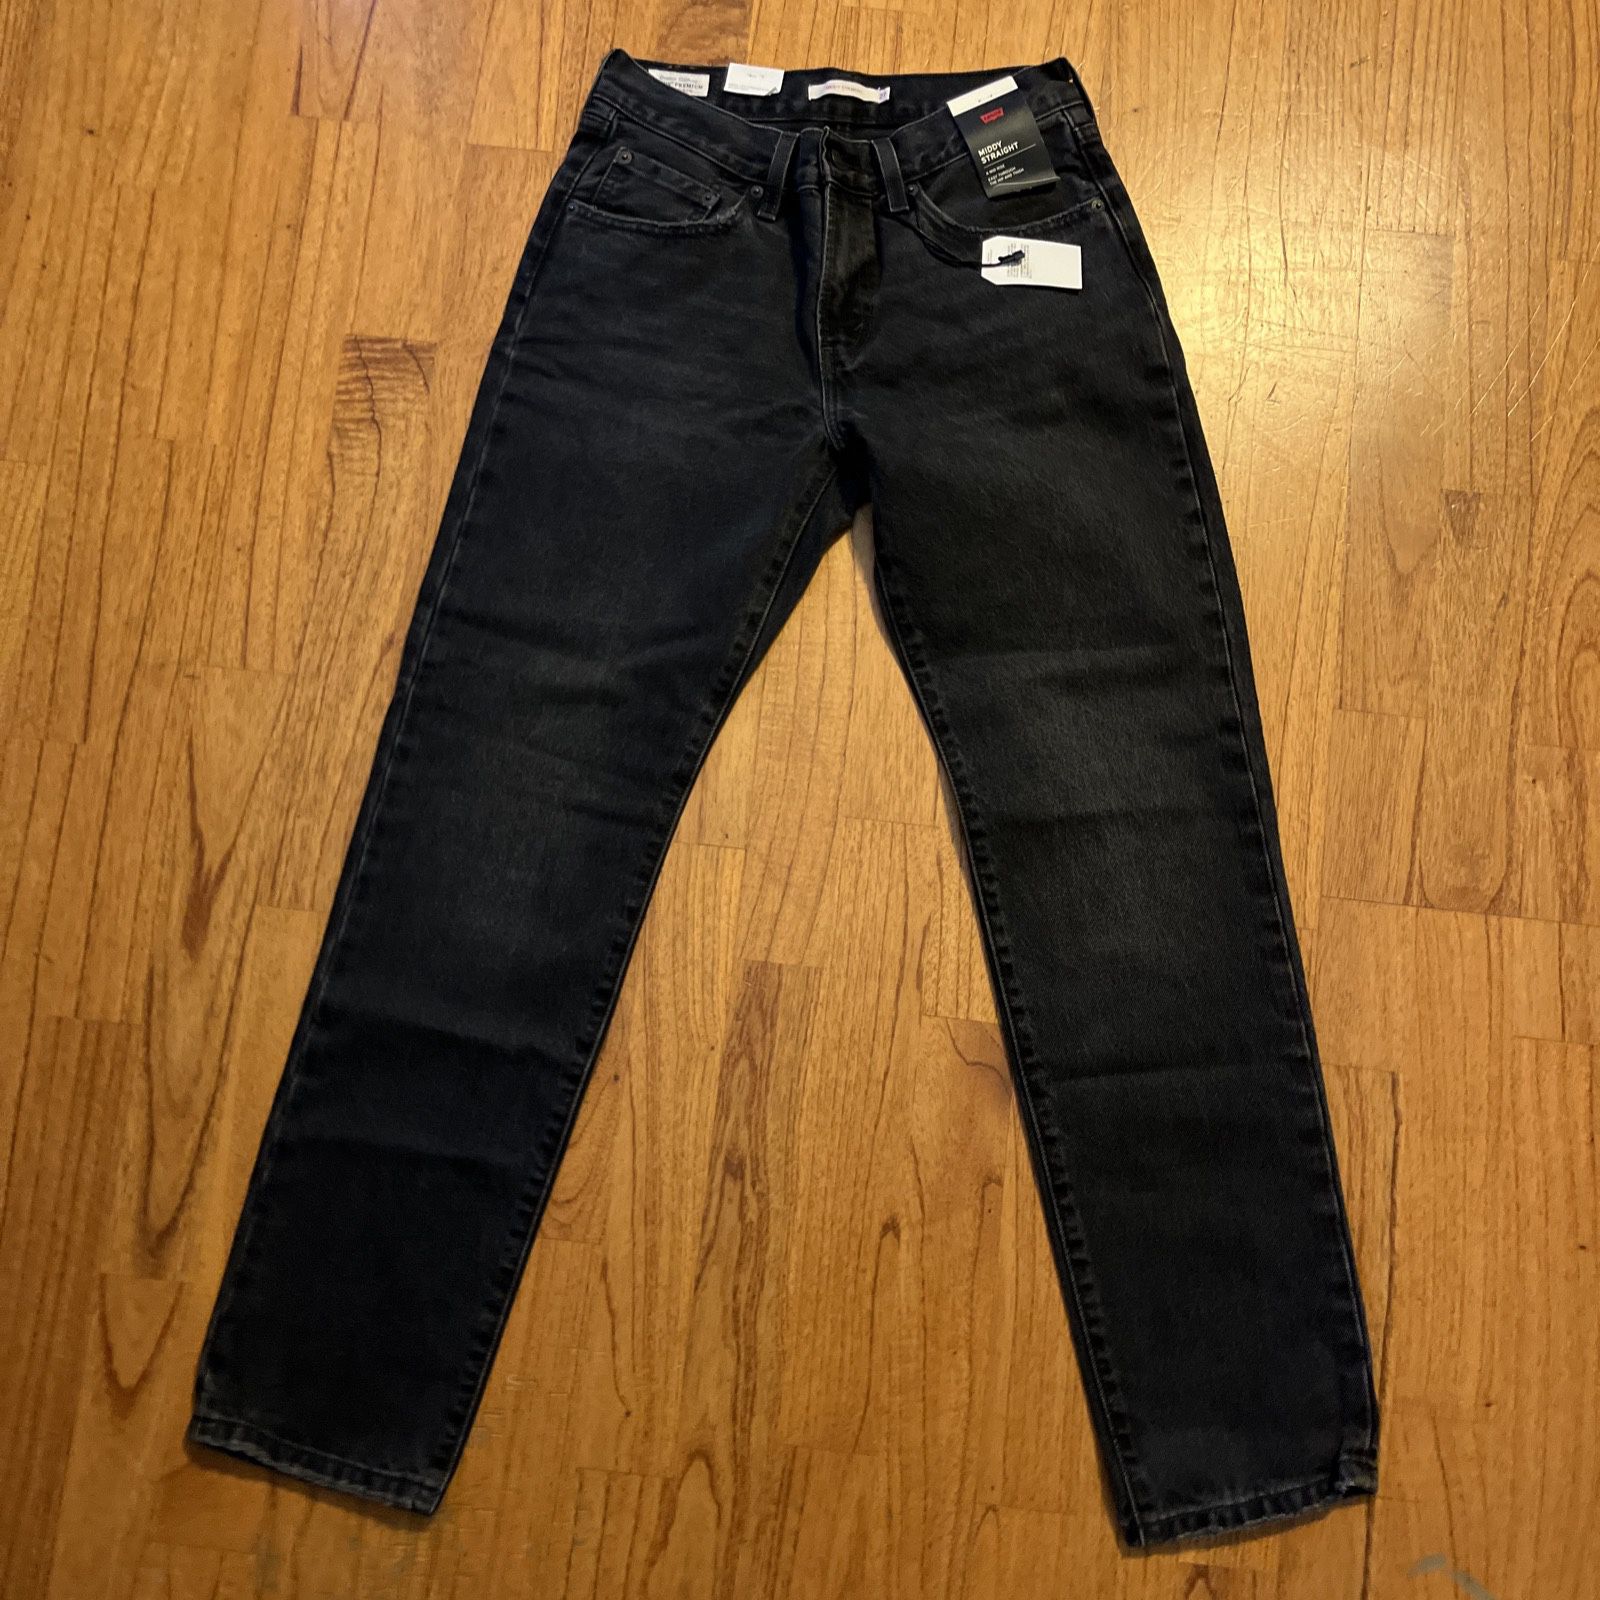 Levi’s Brand New Jeans 